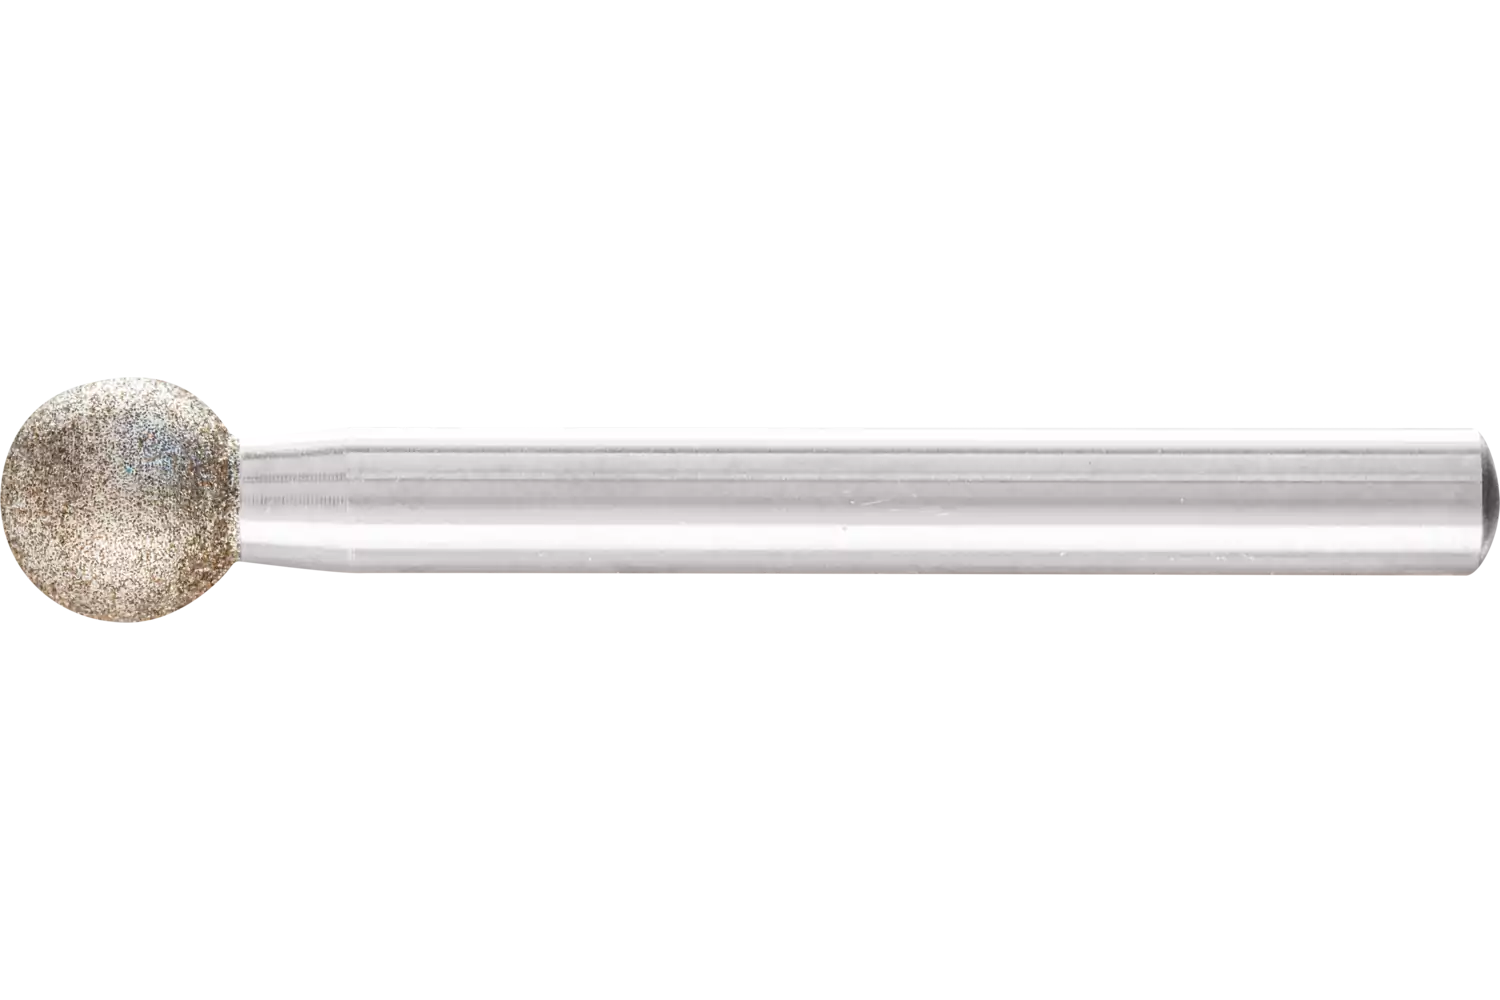 Mola abrasiva in CBN sfera Ø 10,0 mm gambo Ø 6 mm B126 (media) per incisione e sbavatura 1